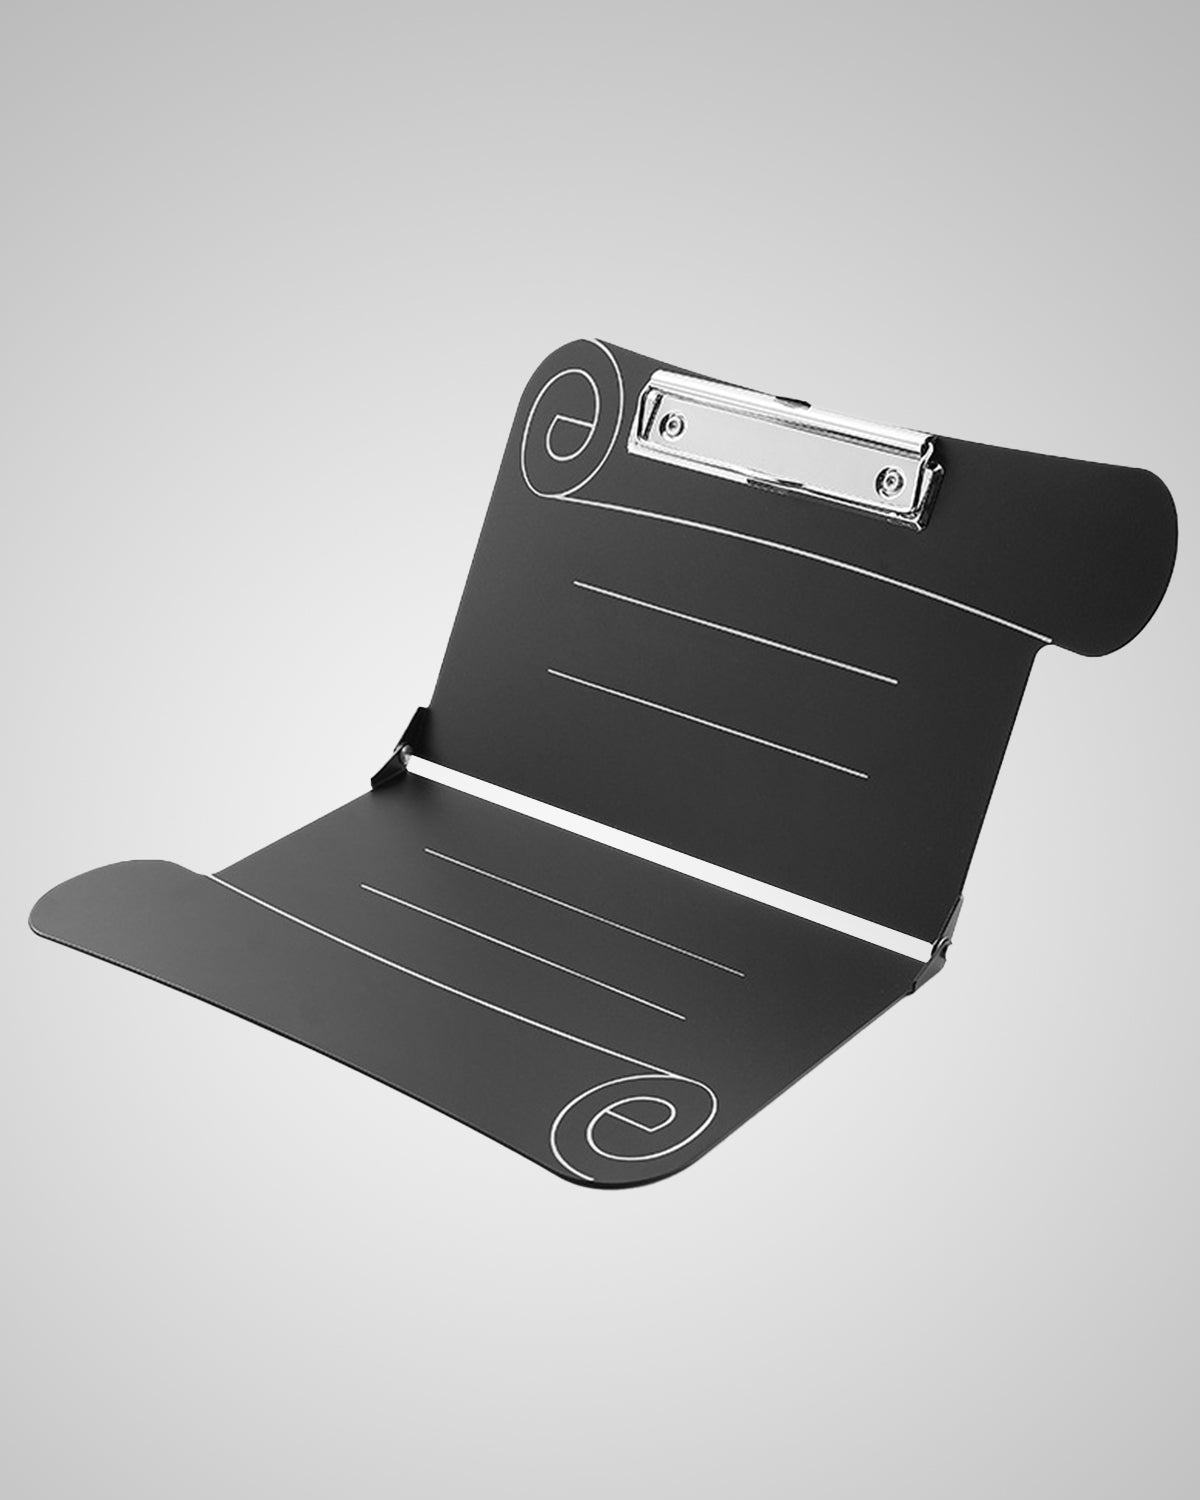 Hawkwell Foldable Clipboard - Viana Black 2 Layers